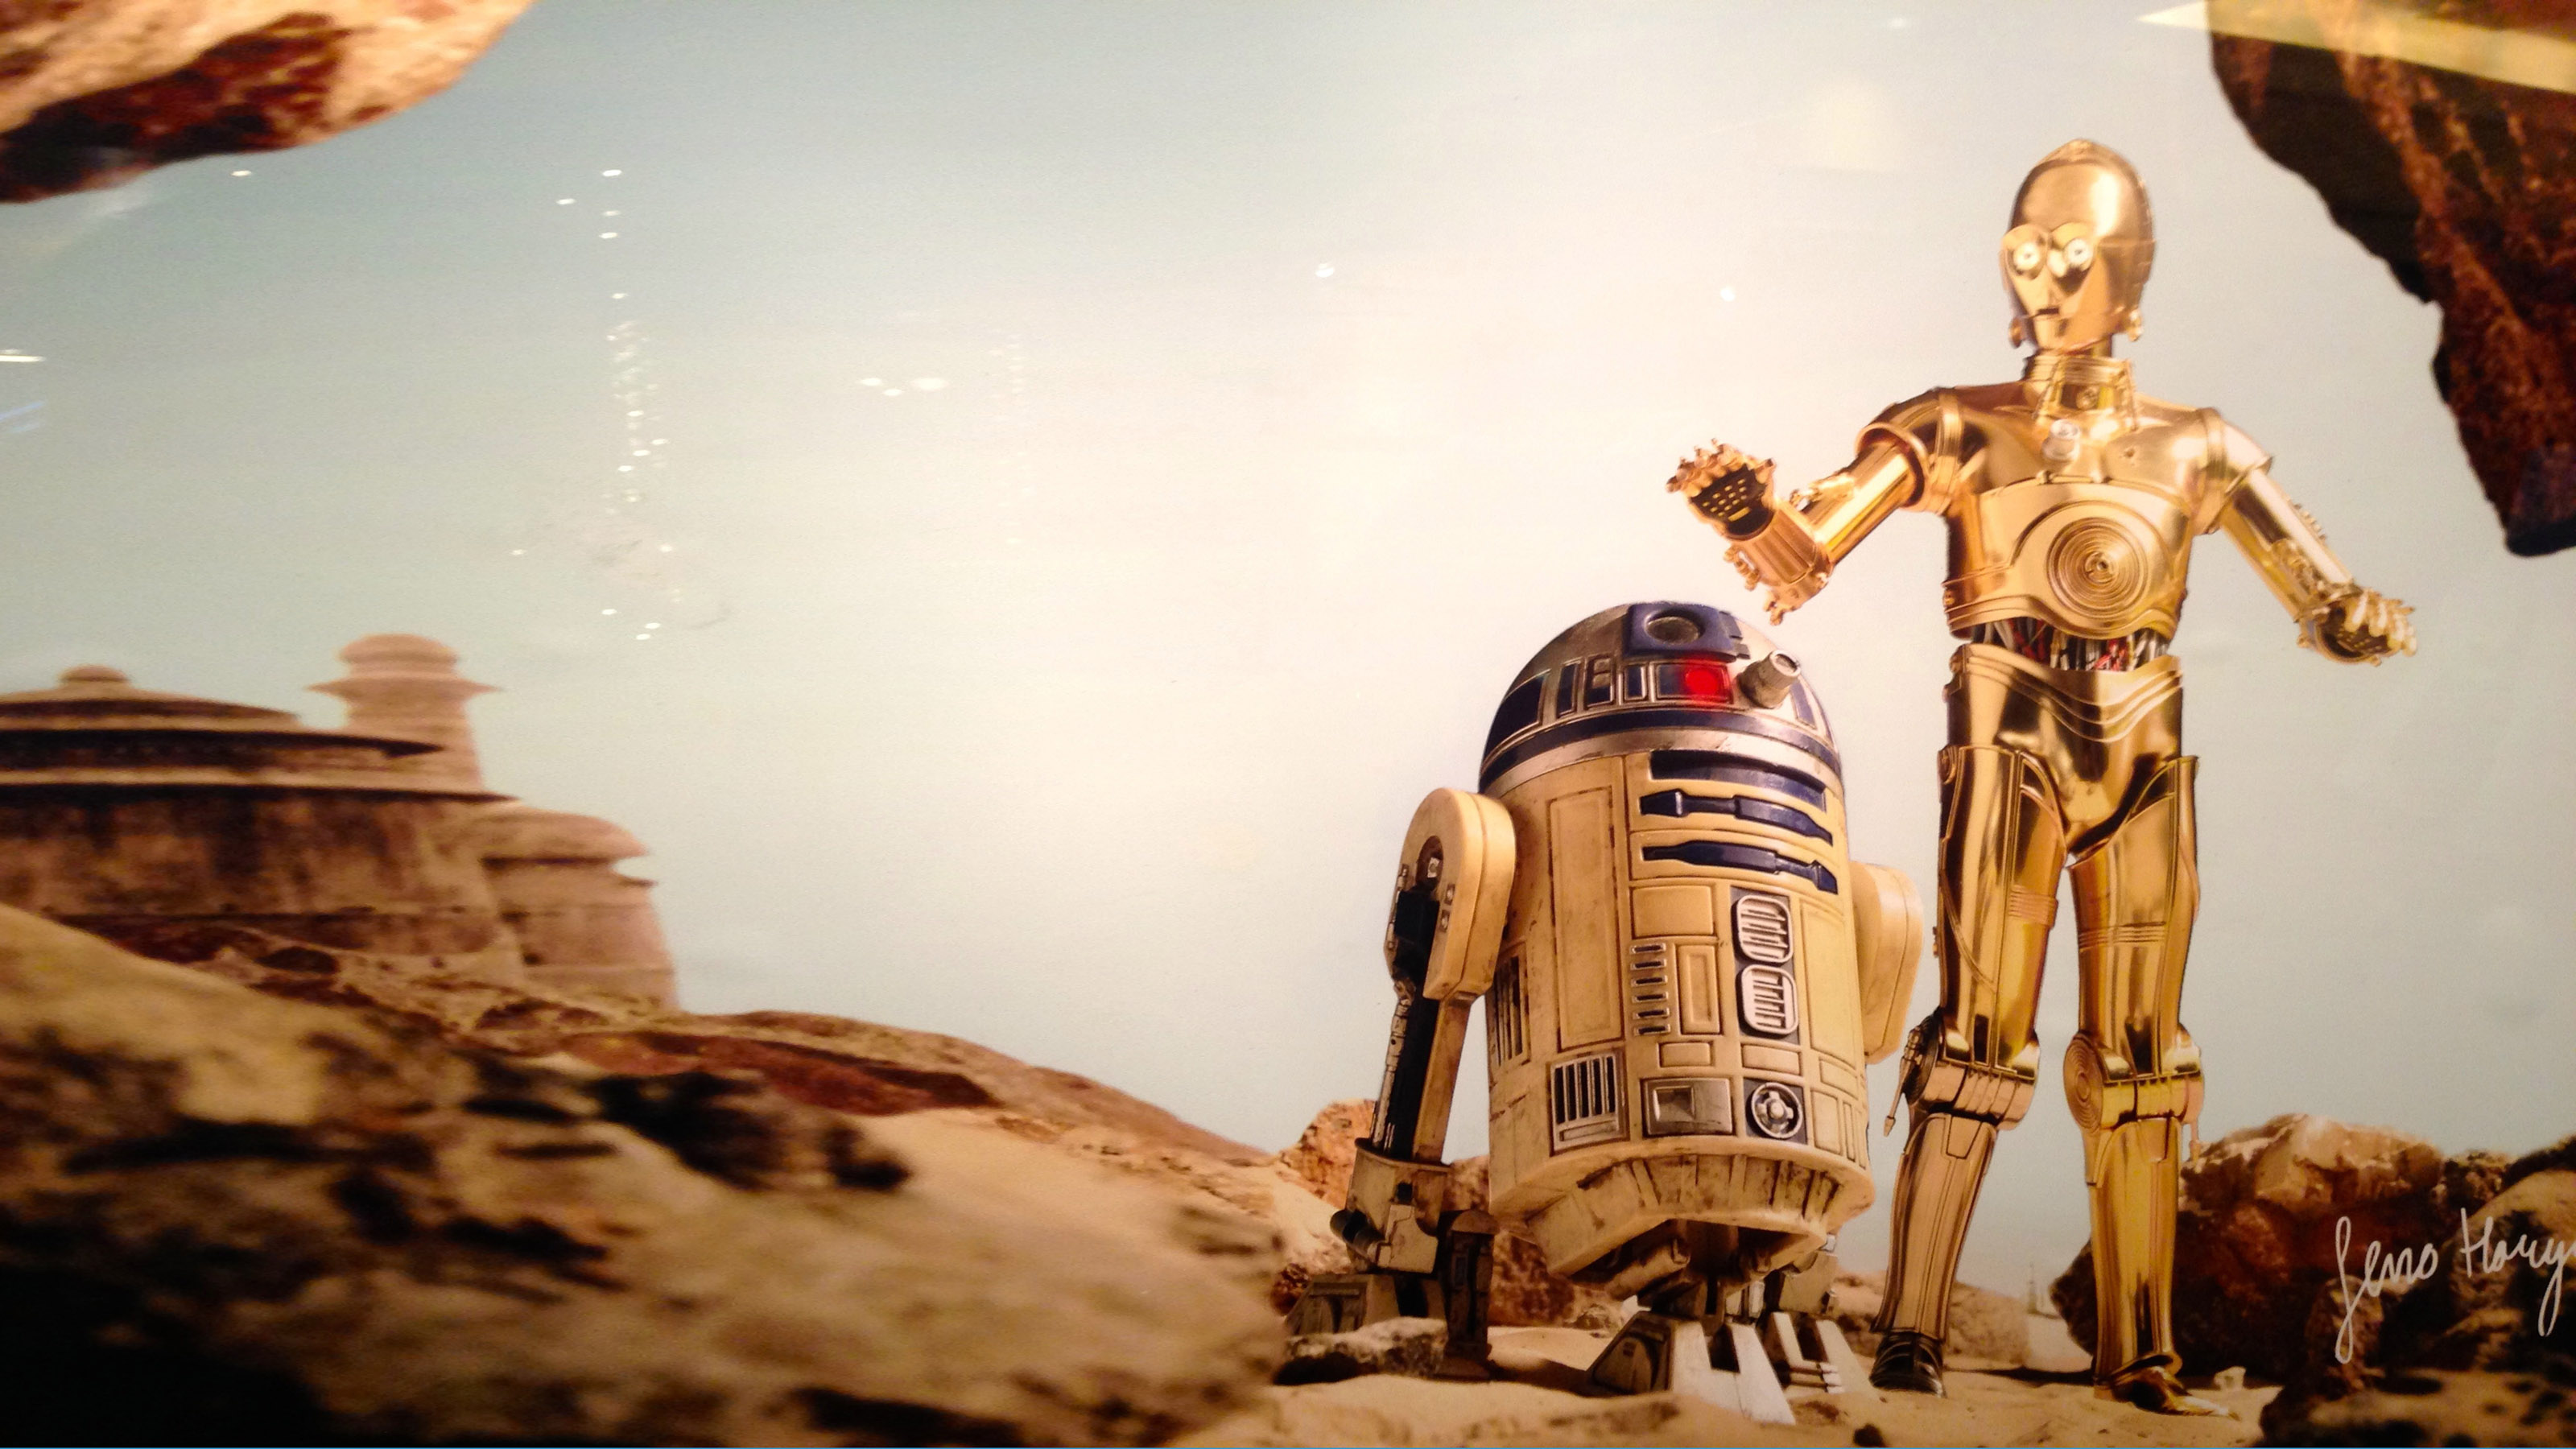 Star Wars R2 D2 And C 3po Wallpaper Hd Wallpapers13 Com